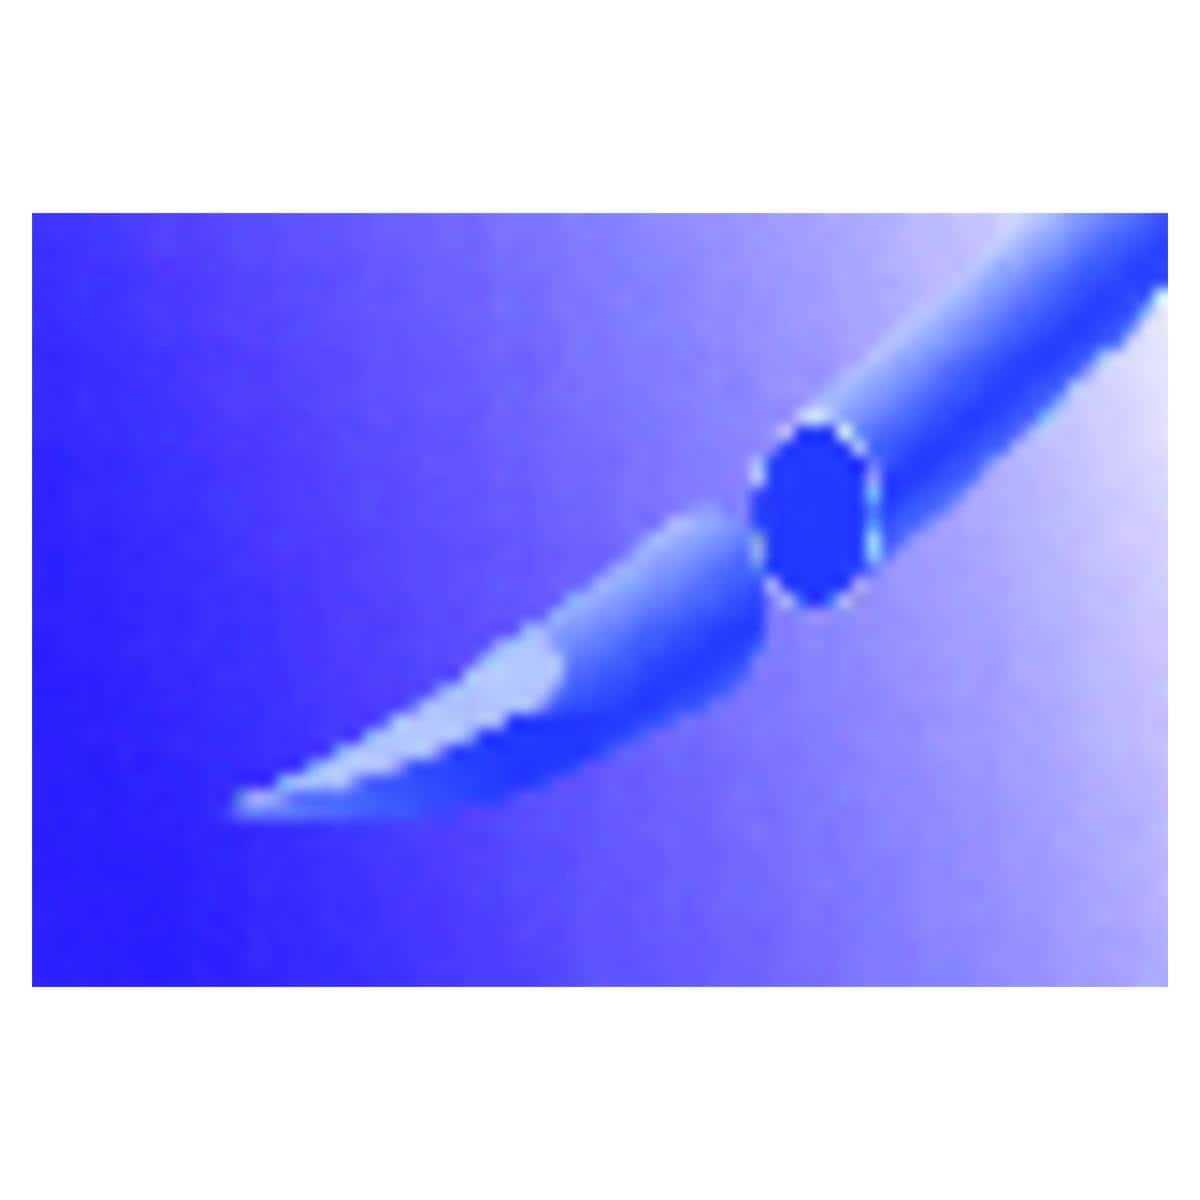 Fil Vicryl rapide ETHICON - 17mm - 4/0 - 75cm - Bote de 36